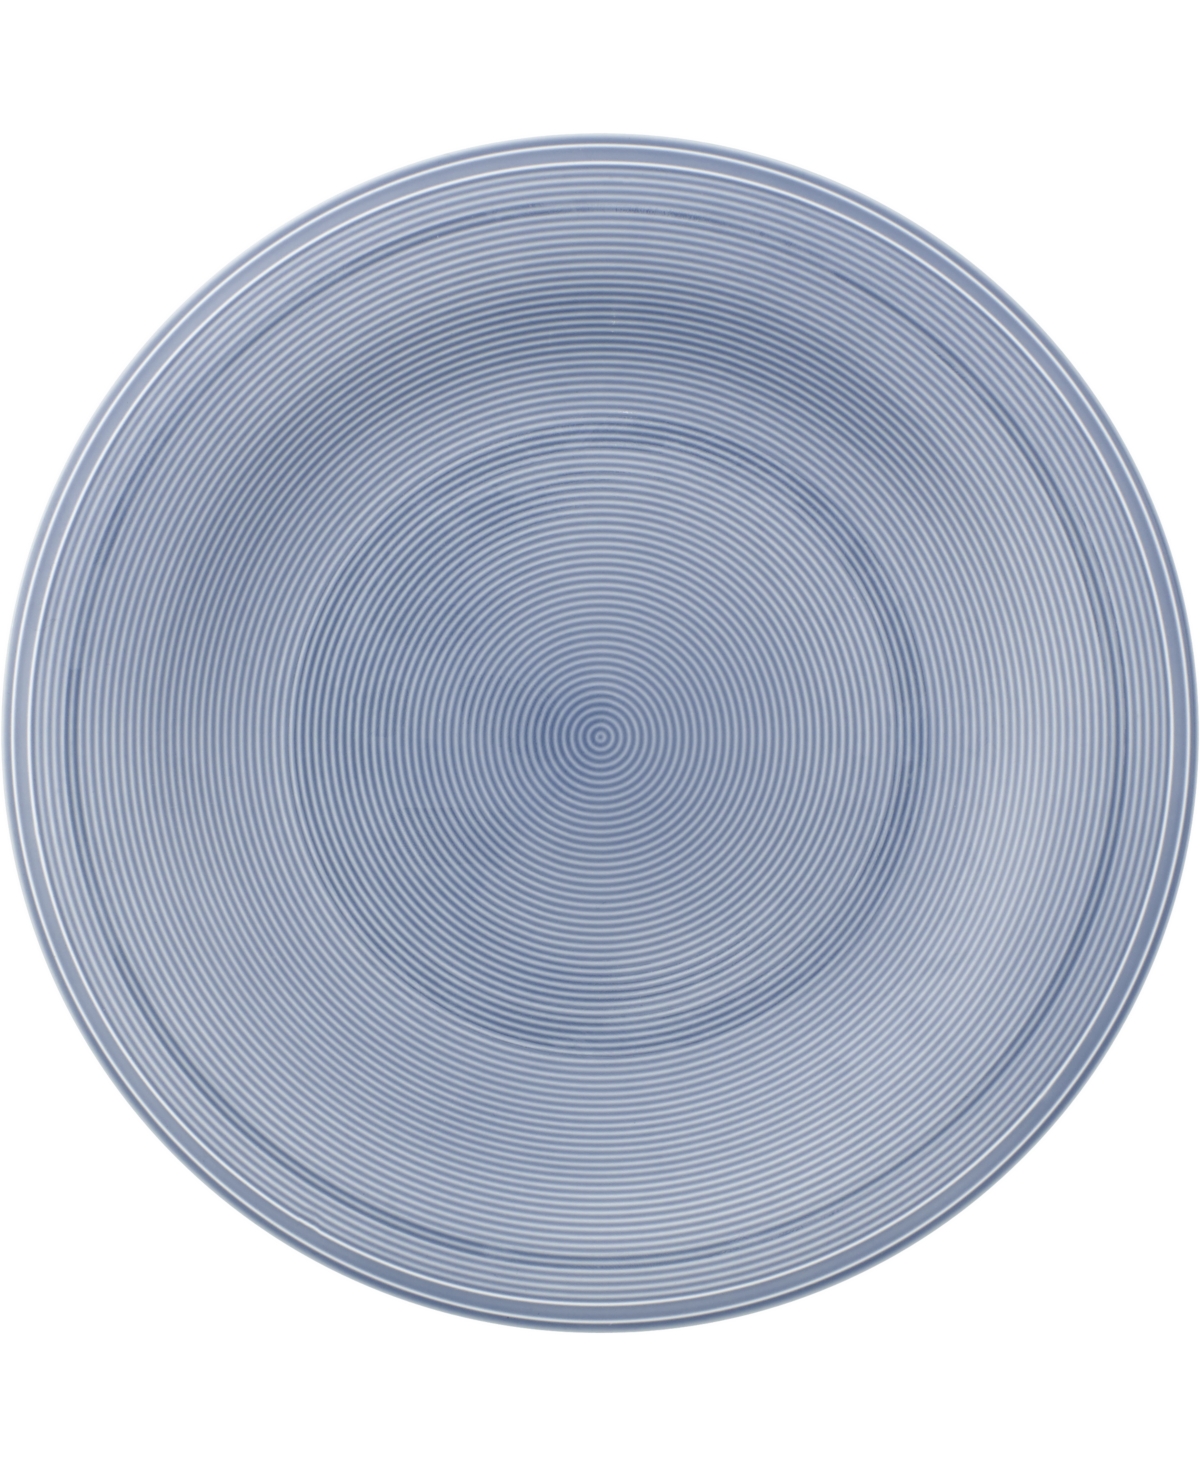 Color Loop Horizon Blue Salad Plate - Horizon Blue